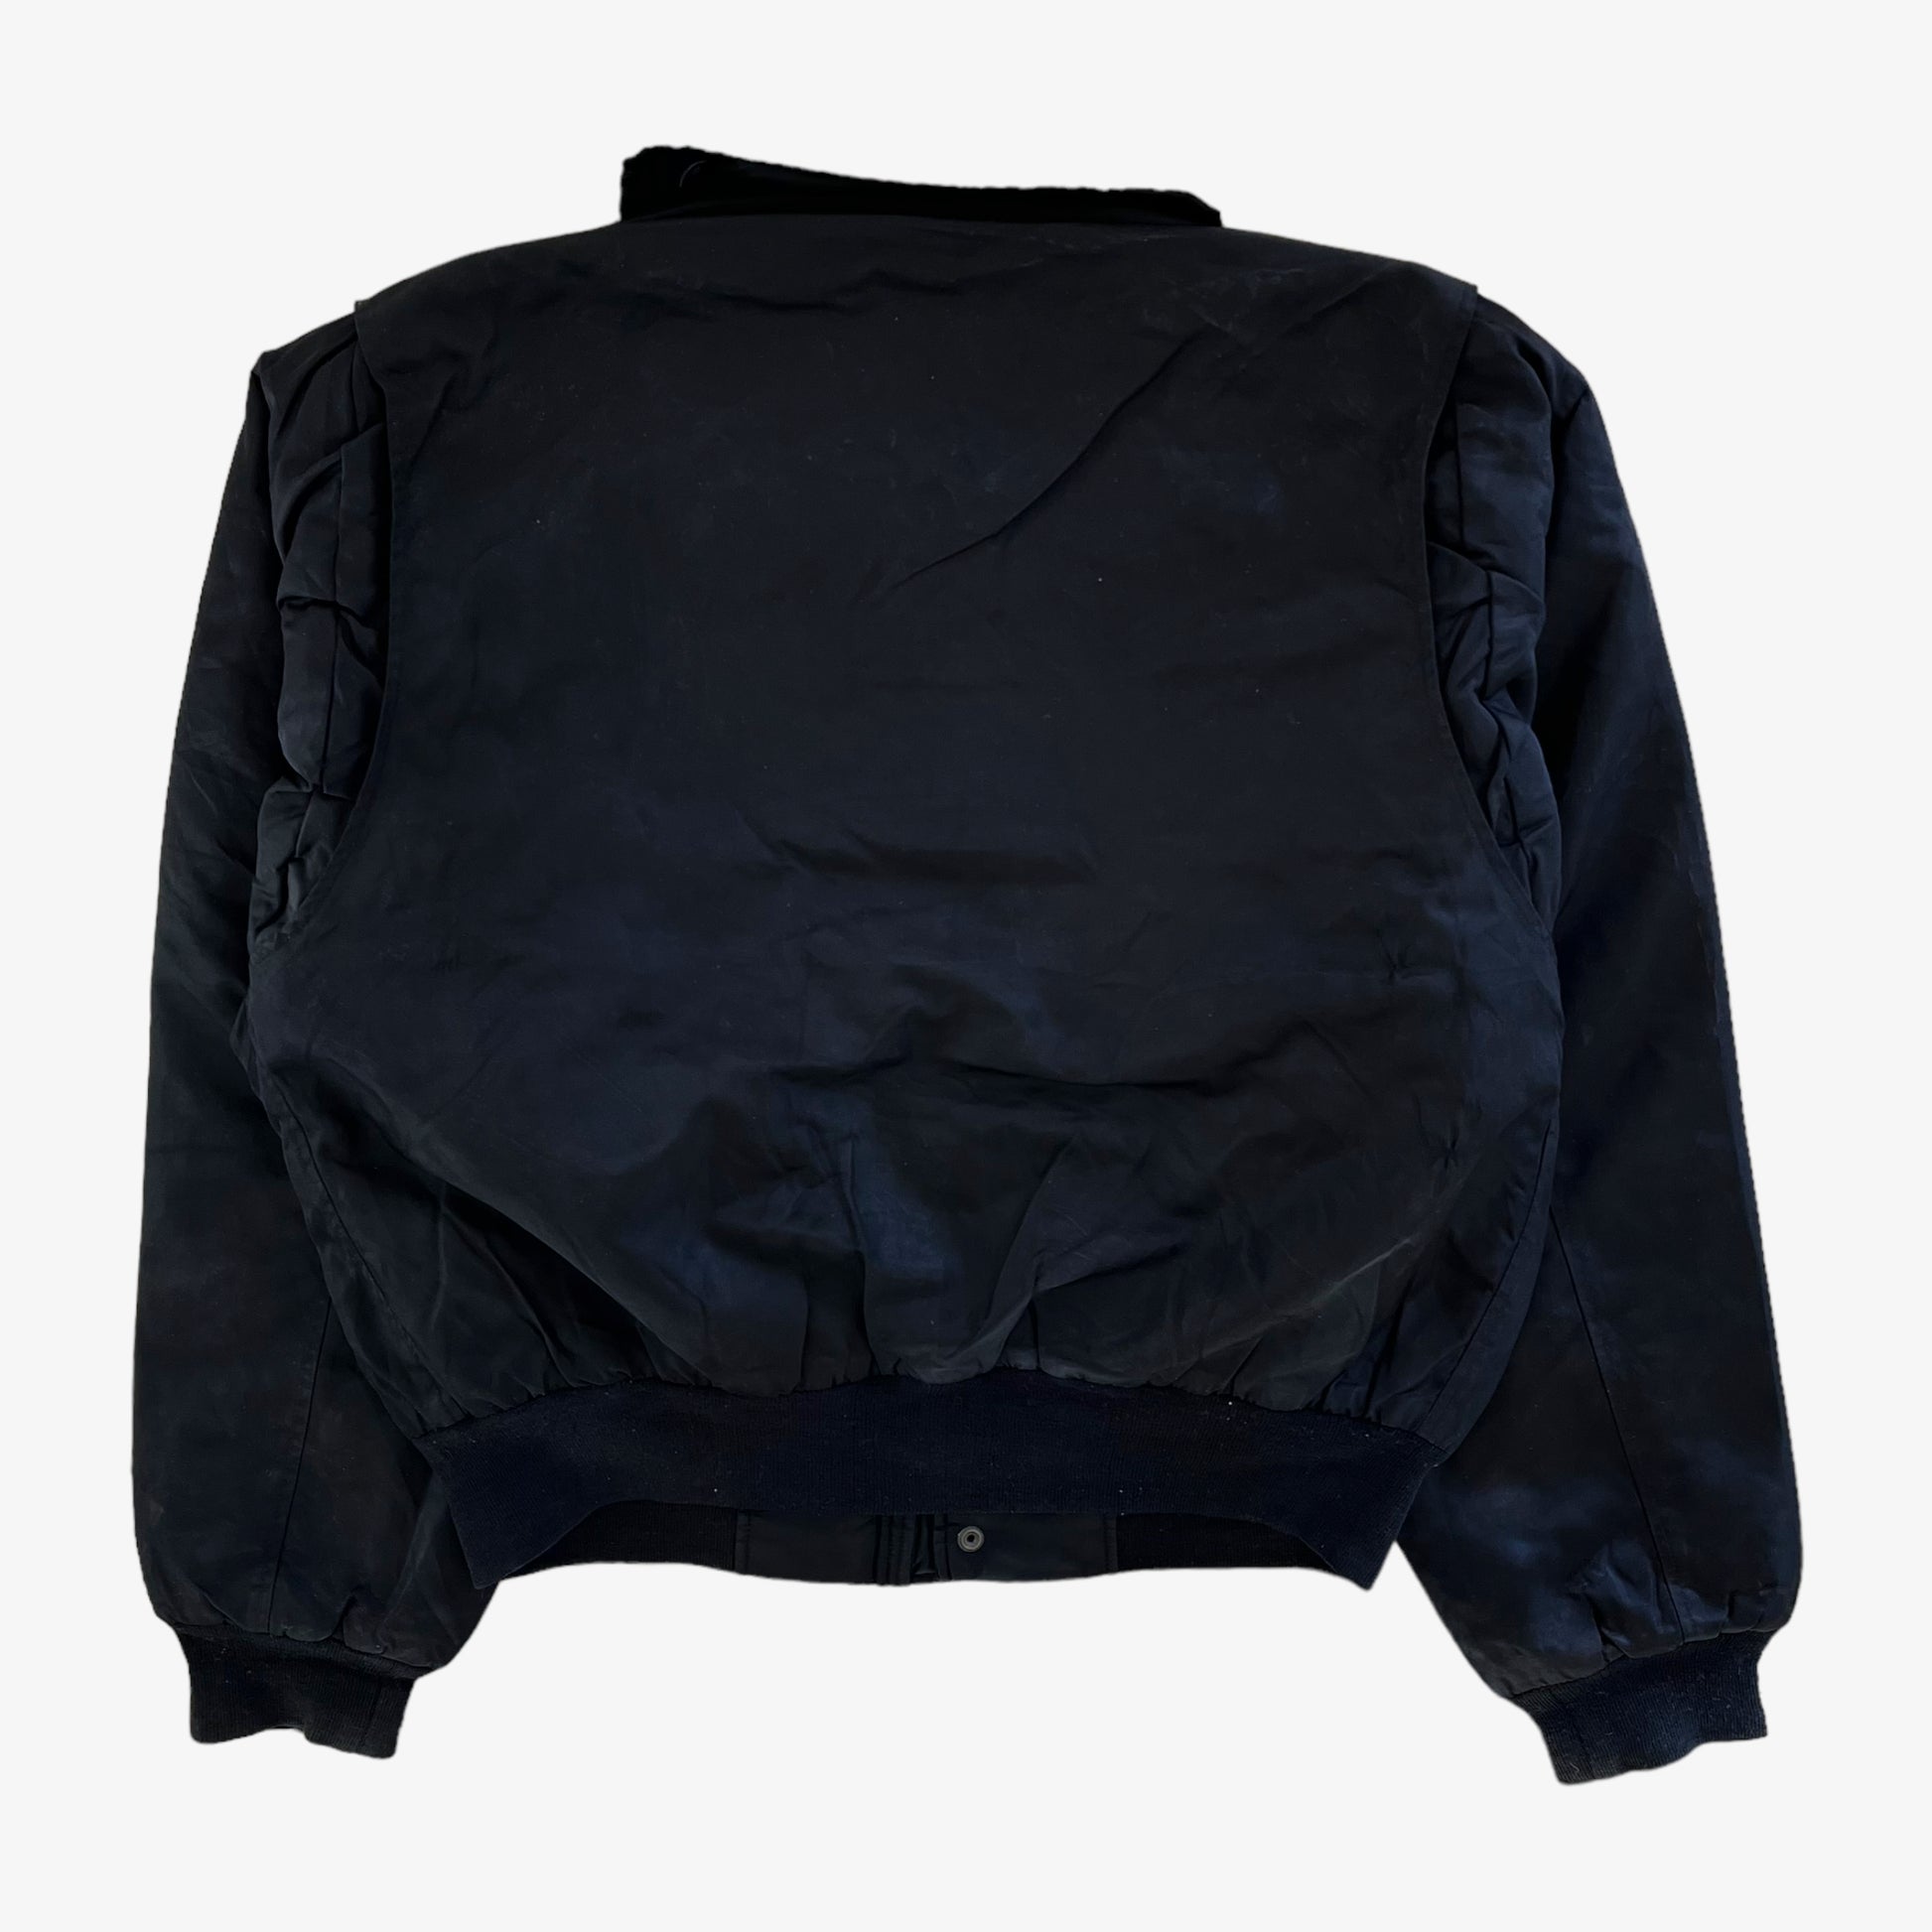 Vintage 90s Redskins Territoire Black Bomber Jacket With Fur Collar Back - Casspios Dream